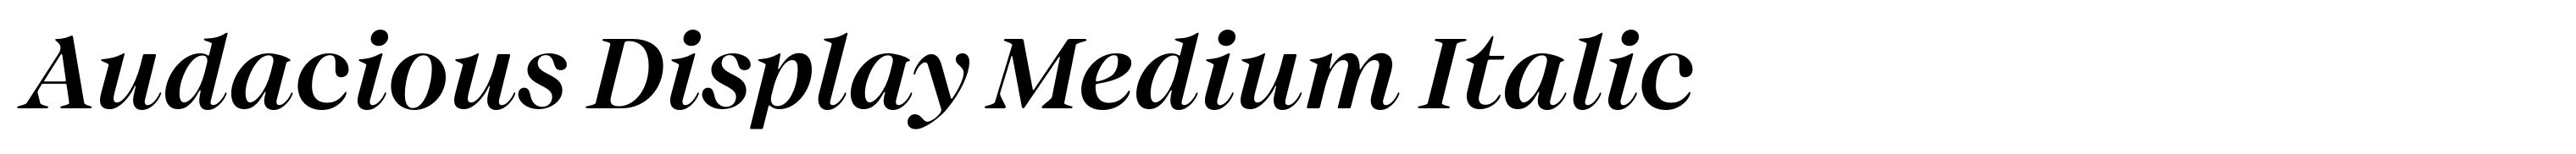 Audacious Display Medium Italic